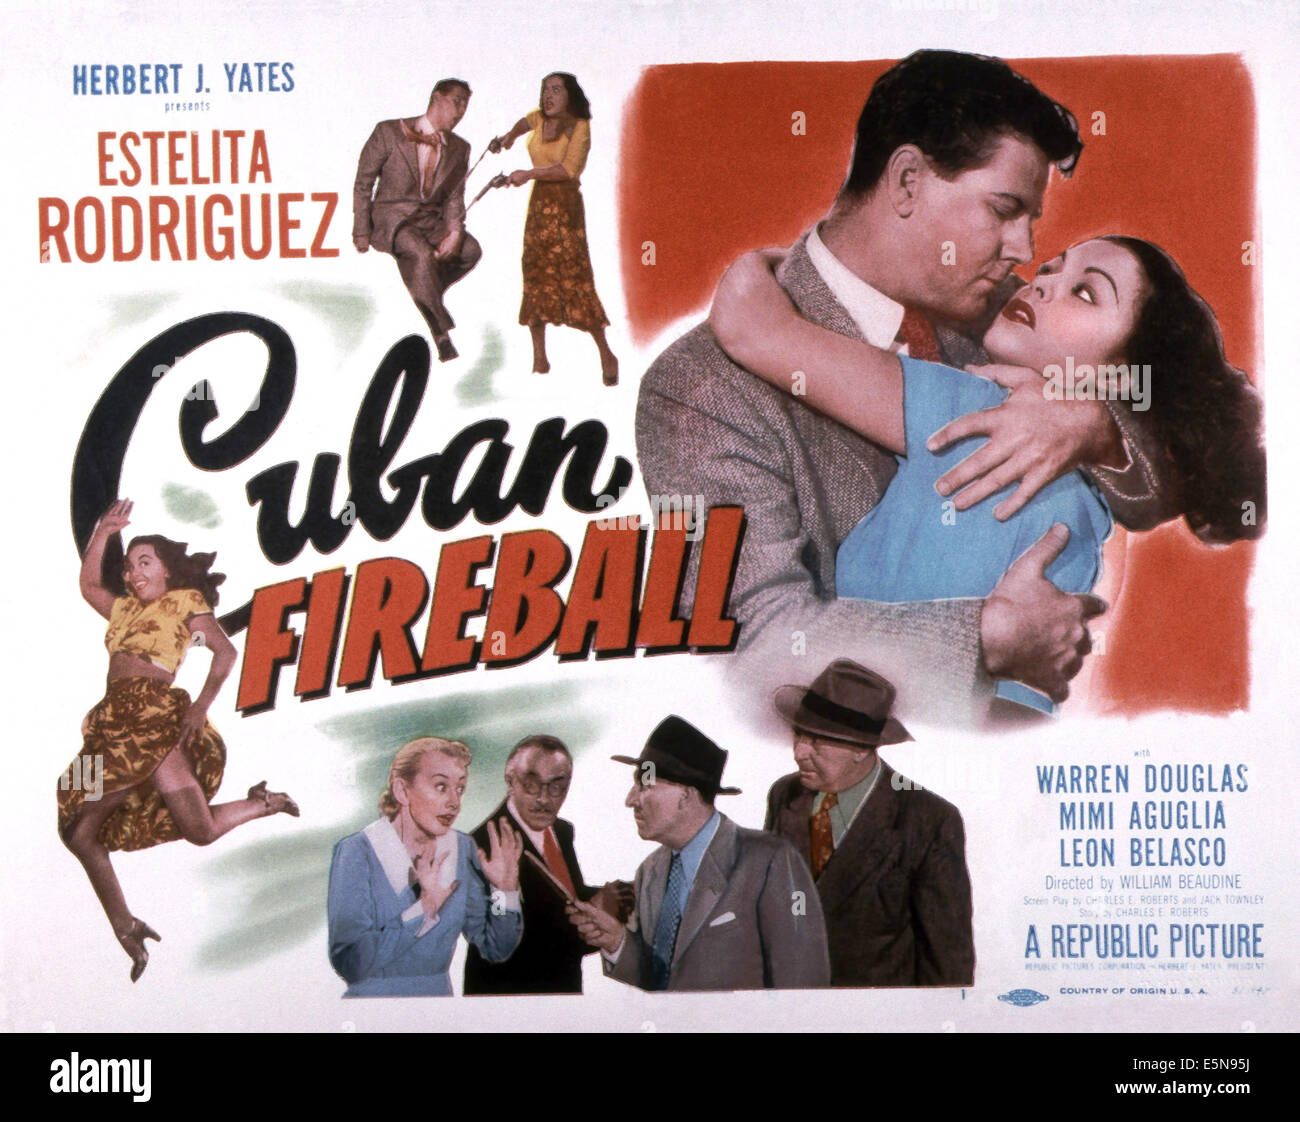 CUBAN FIREBALL, bottom from left: Estelita Rodriguez (leaping), Mimi Aguglia, Leon Belasco, Tim Ryan, Donald MacBride, Stock Photo